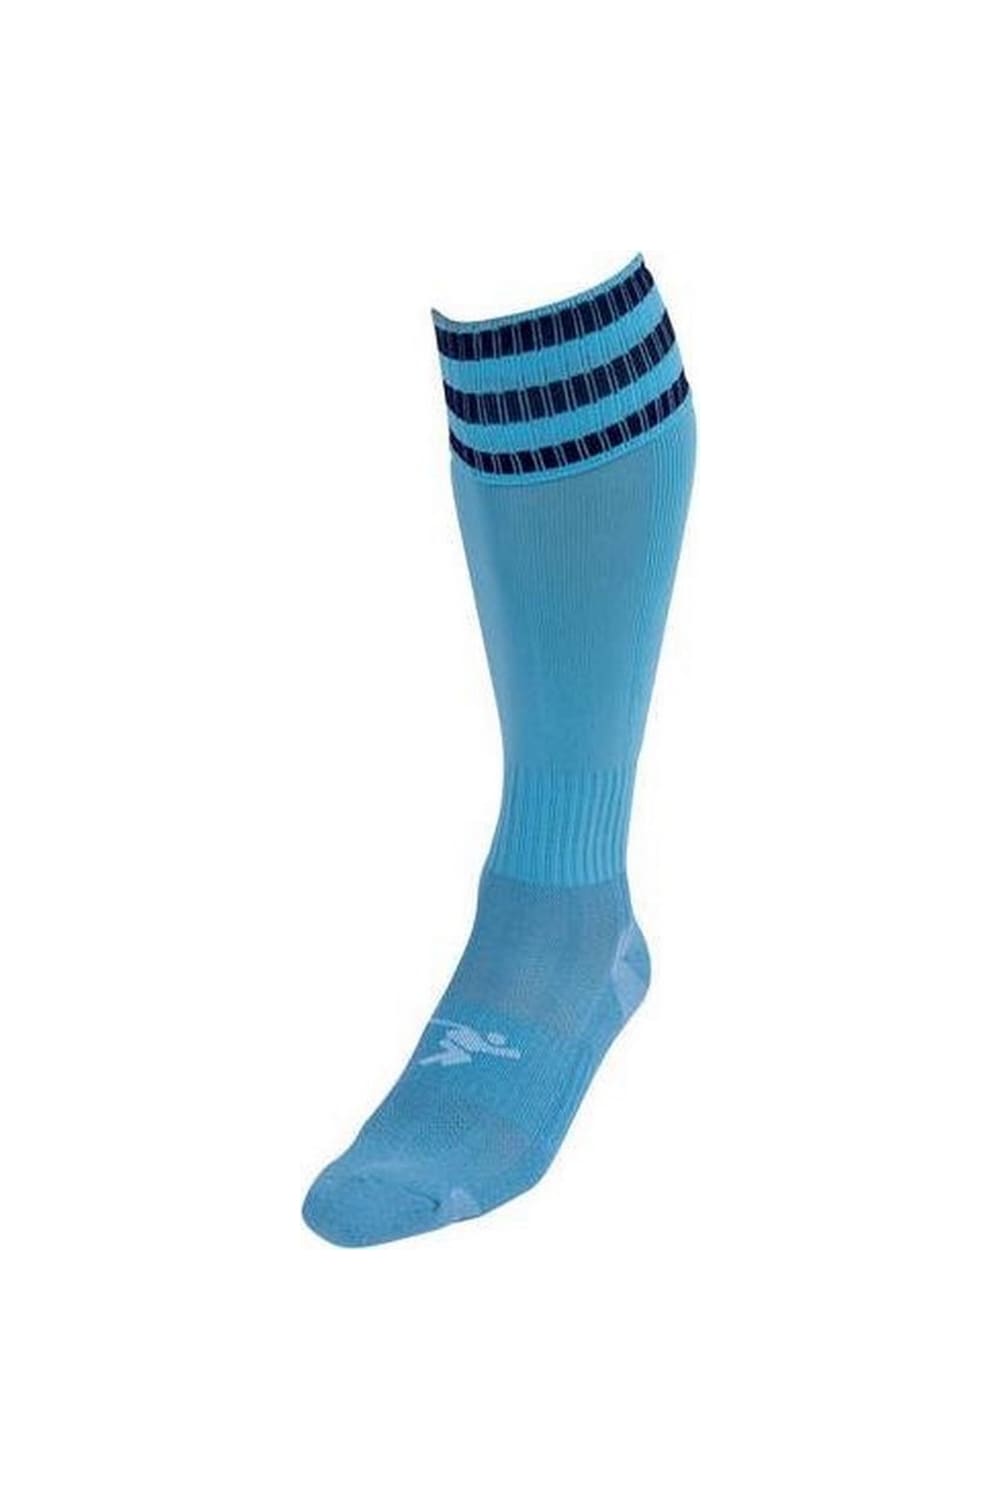 Precision Unisex Adult Pro Football Socks (Sky Blue/Navy)